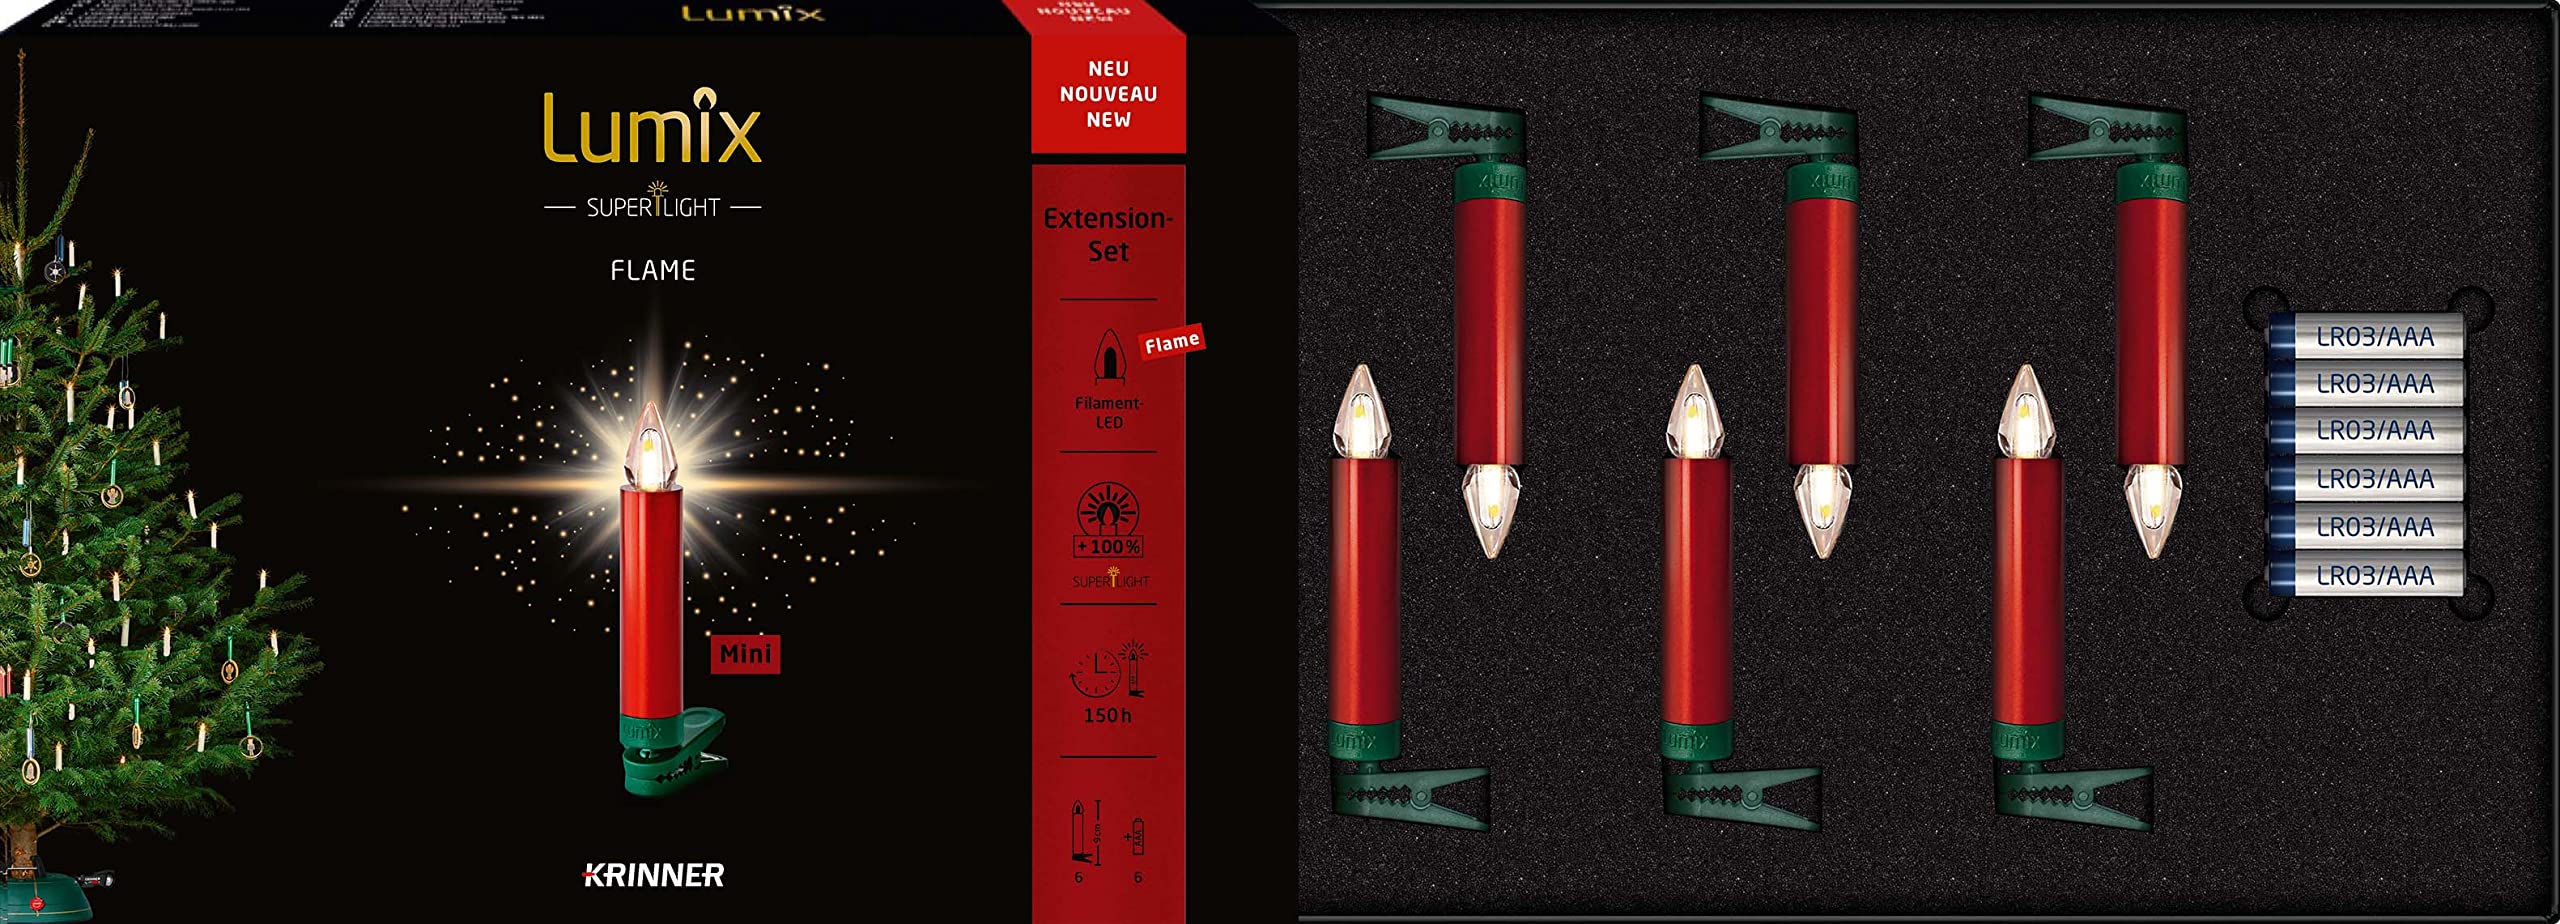 Lumix® kabellose LED Christbaumkerzen Weihnachtsbaumkerzen 6er Erweiterungs-Set SuperLight Flame Metallic Mini Rot 9cm warmweiß 77156